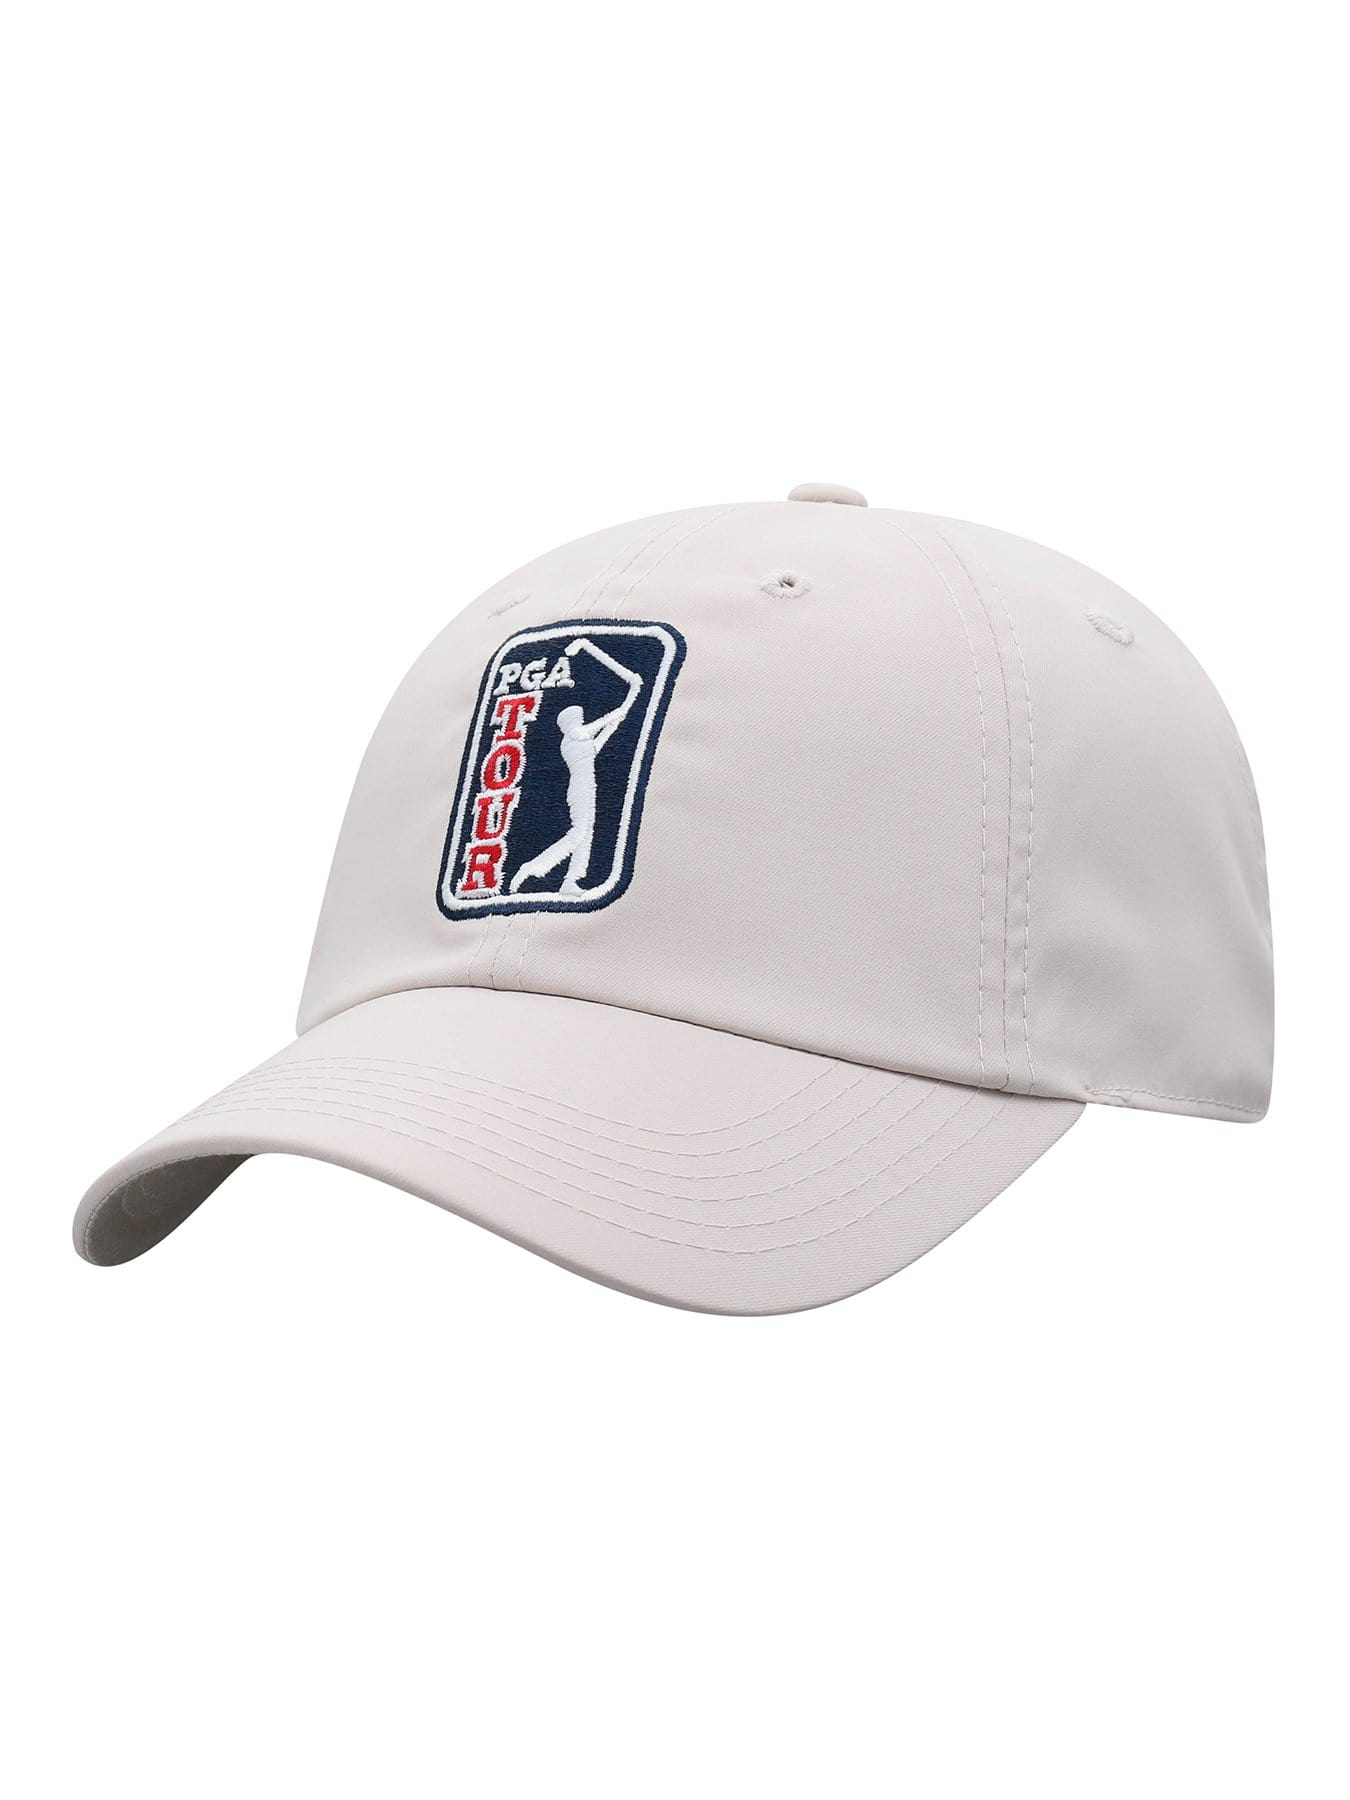 PGA TOUR Apparel Classic Logo Adjustable Hat, Cream White | Golf Apparel Shop